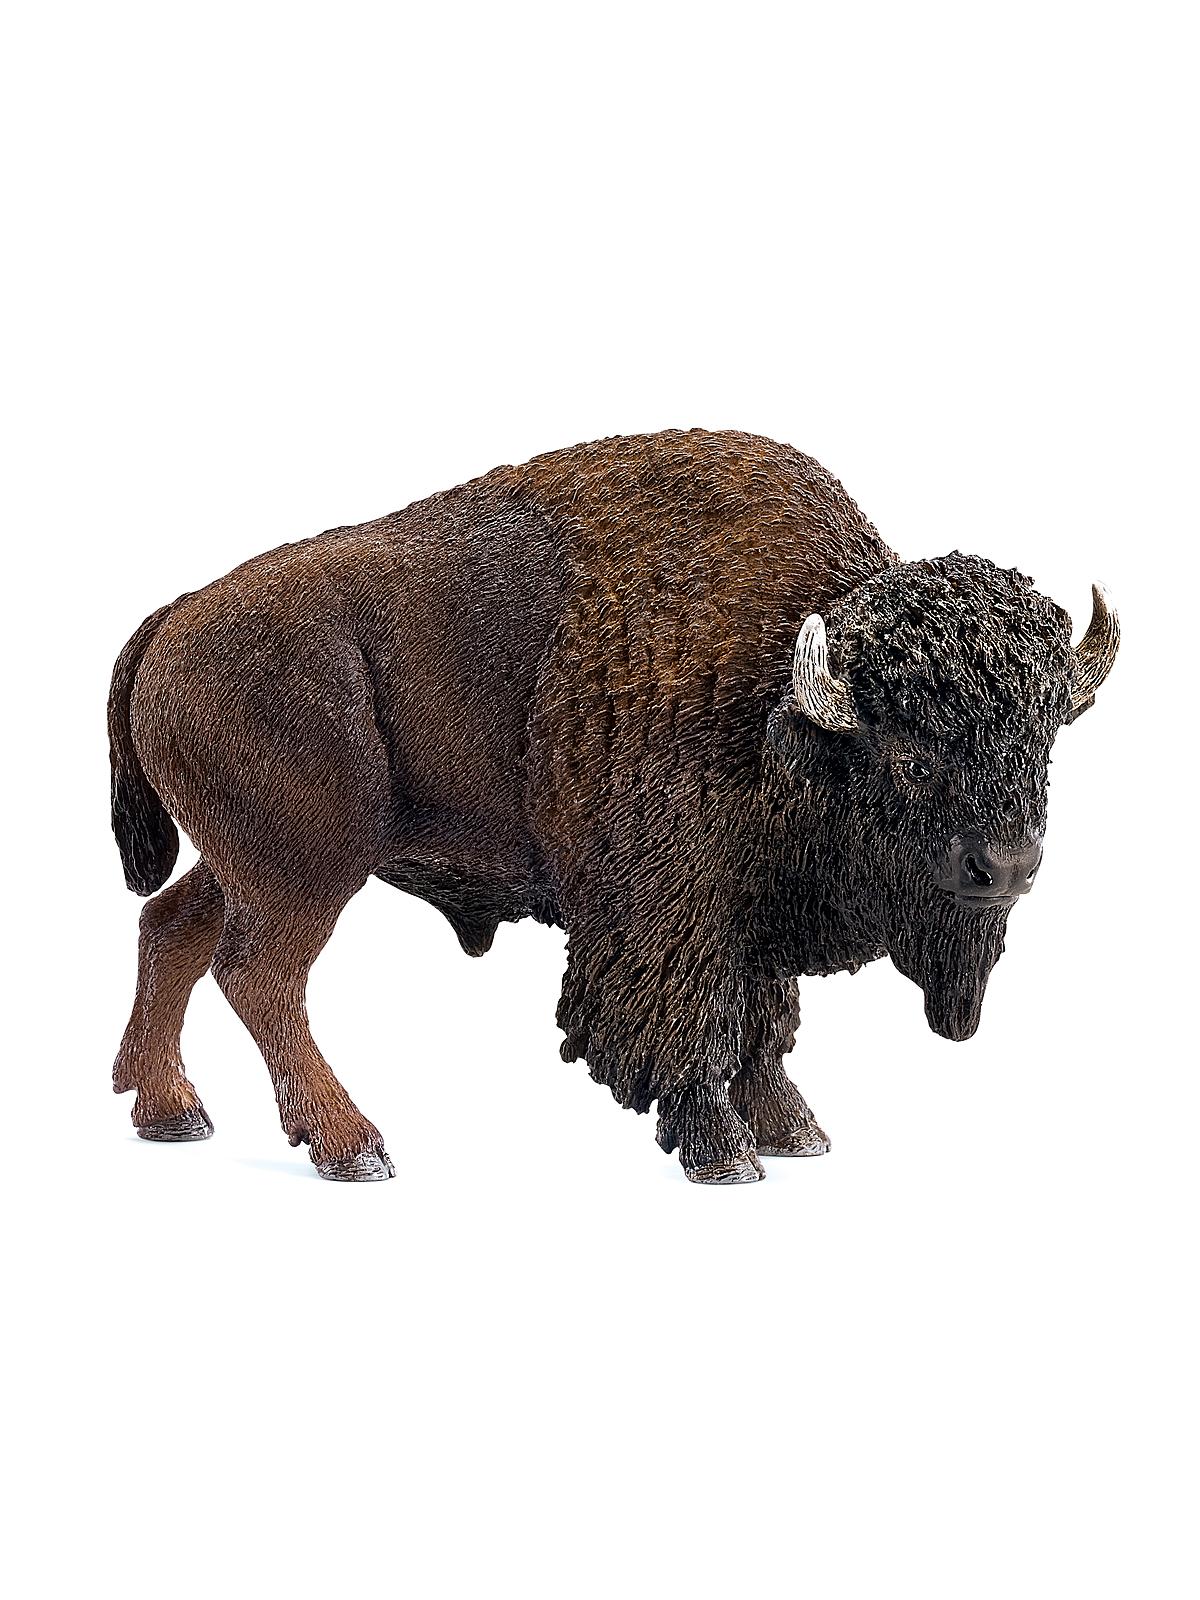 Wild Life Animals American Bison